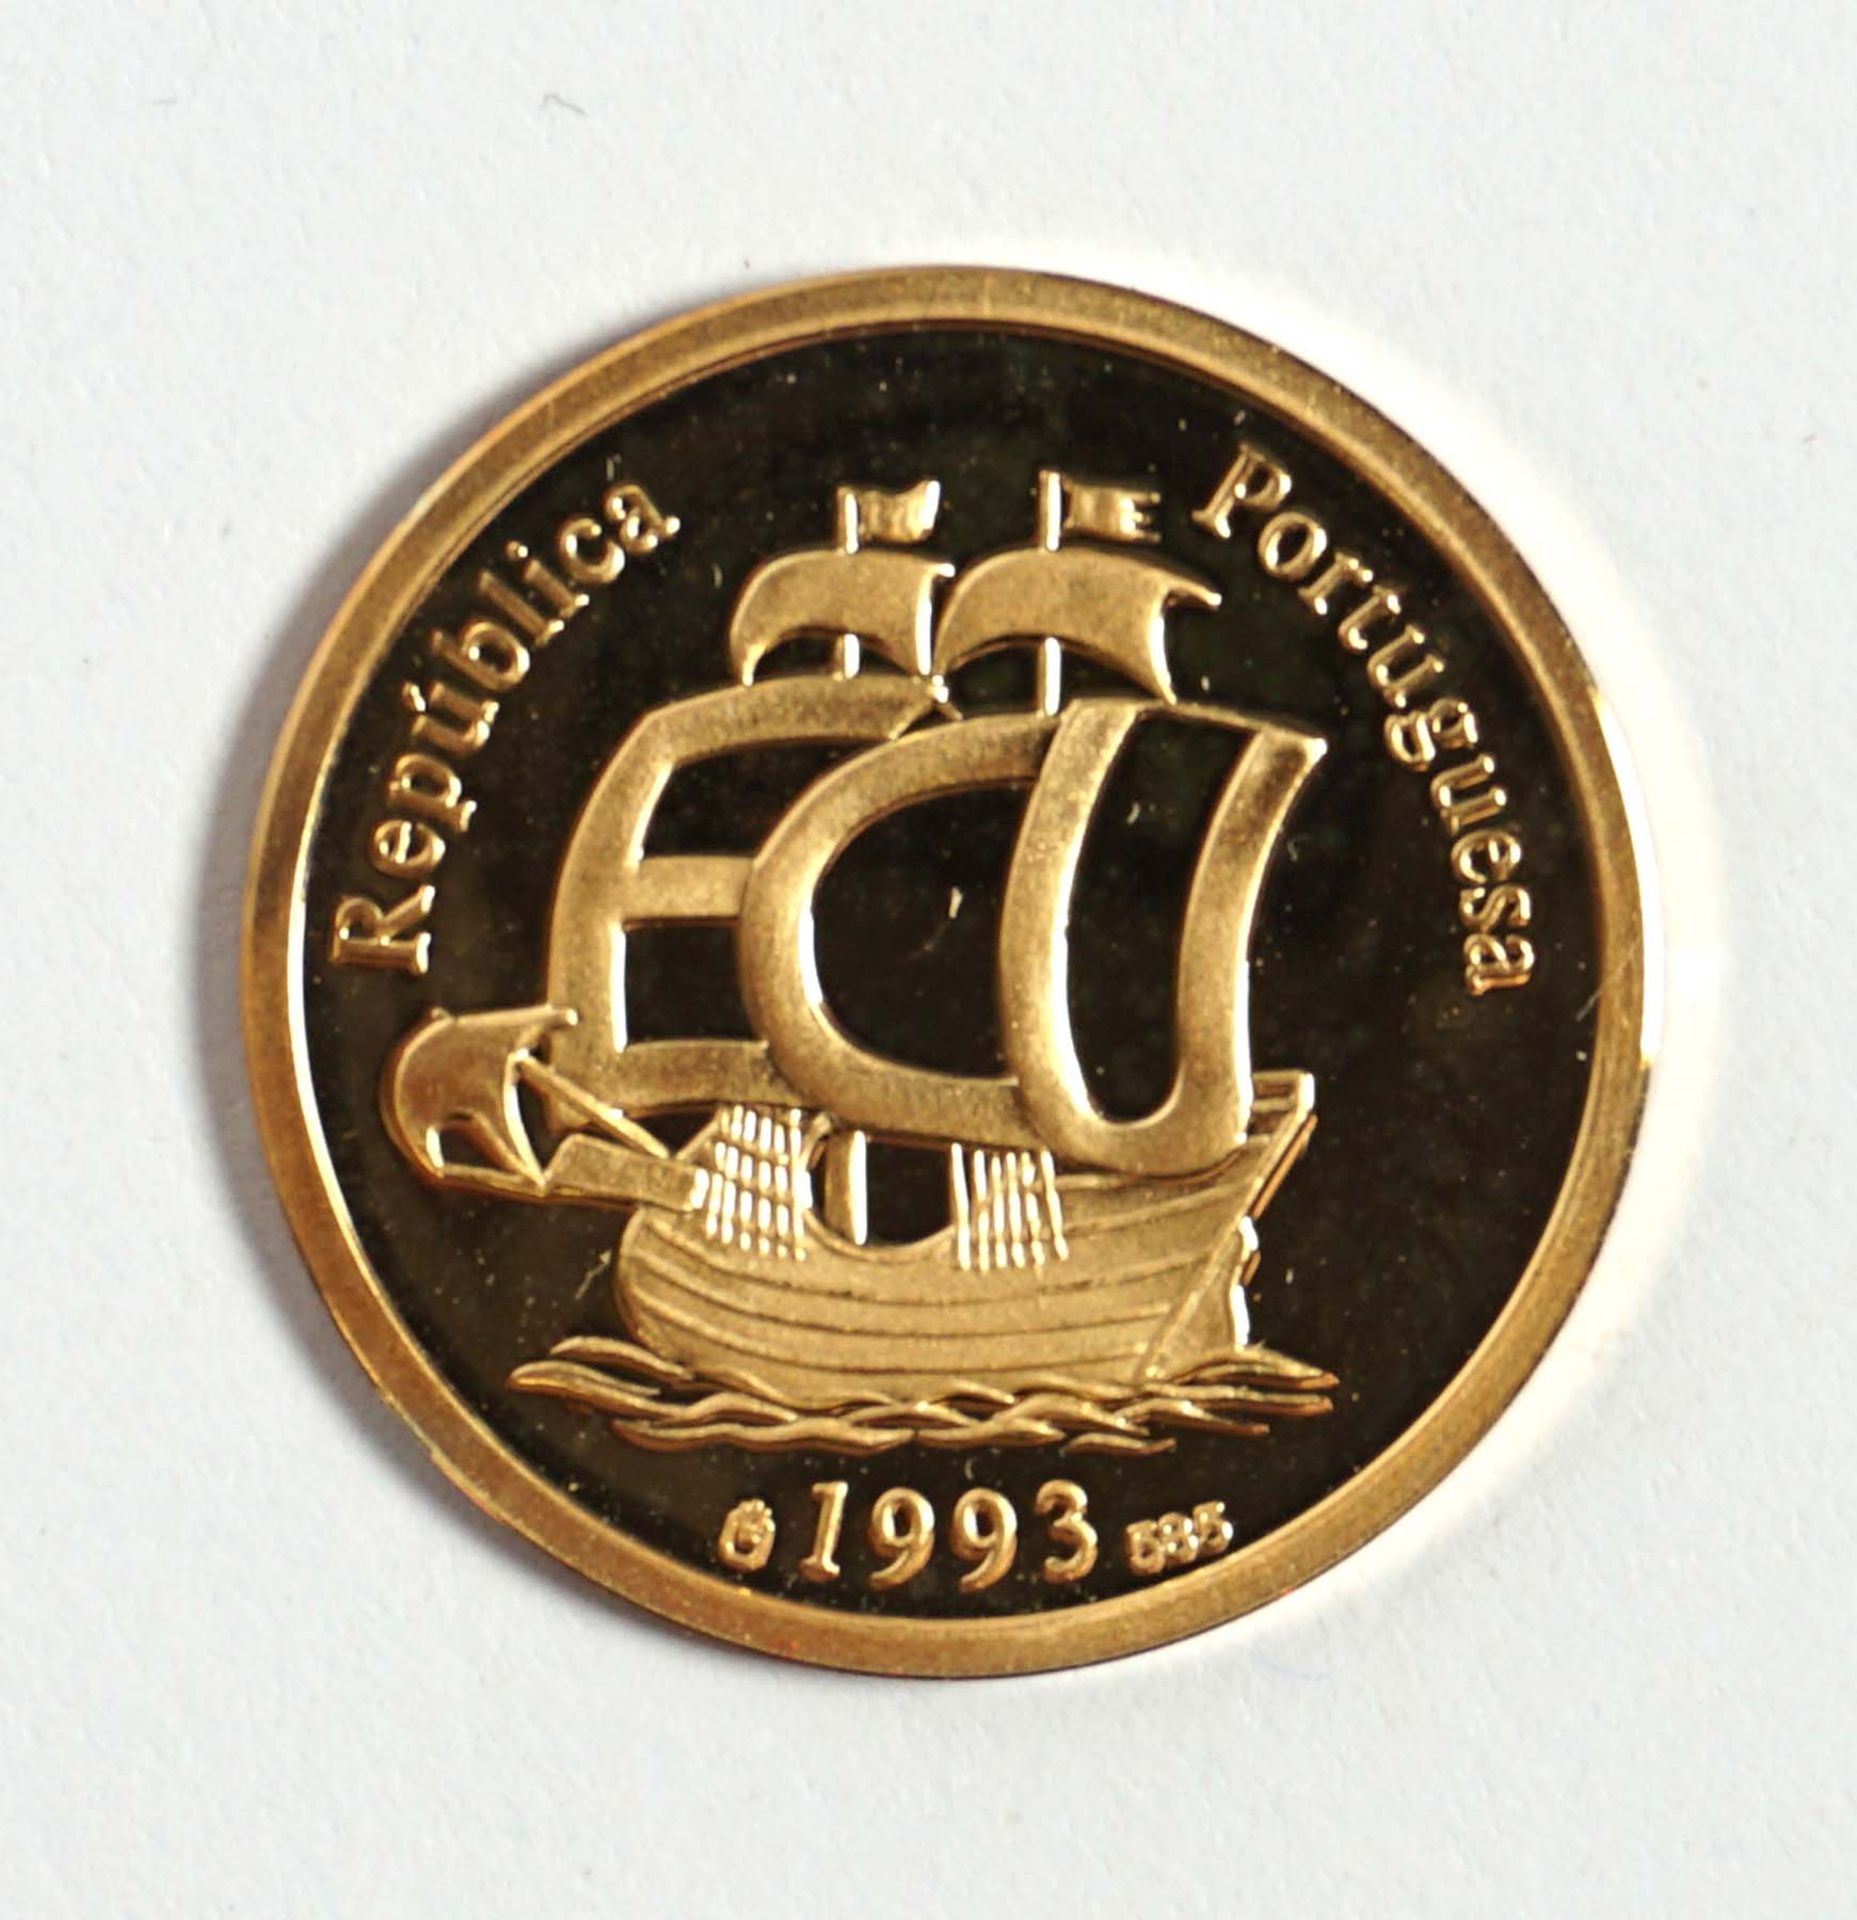 PORTUGAL, ECU-Goldmedaille, 1993, Vasco da Gama, - Image 2 of 2